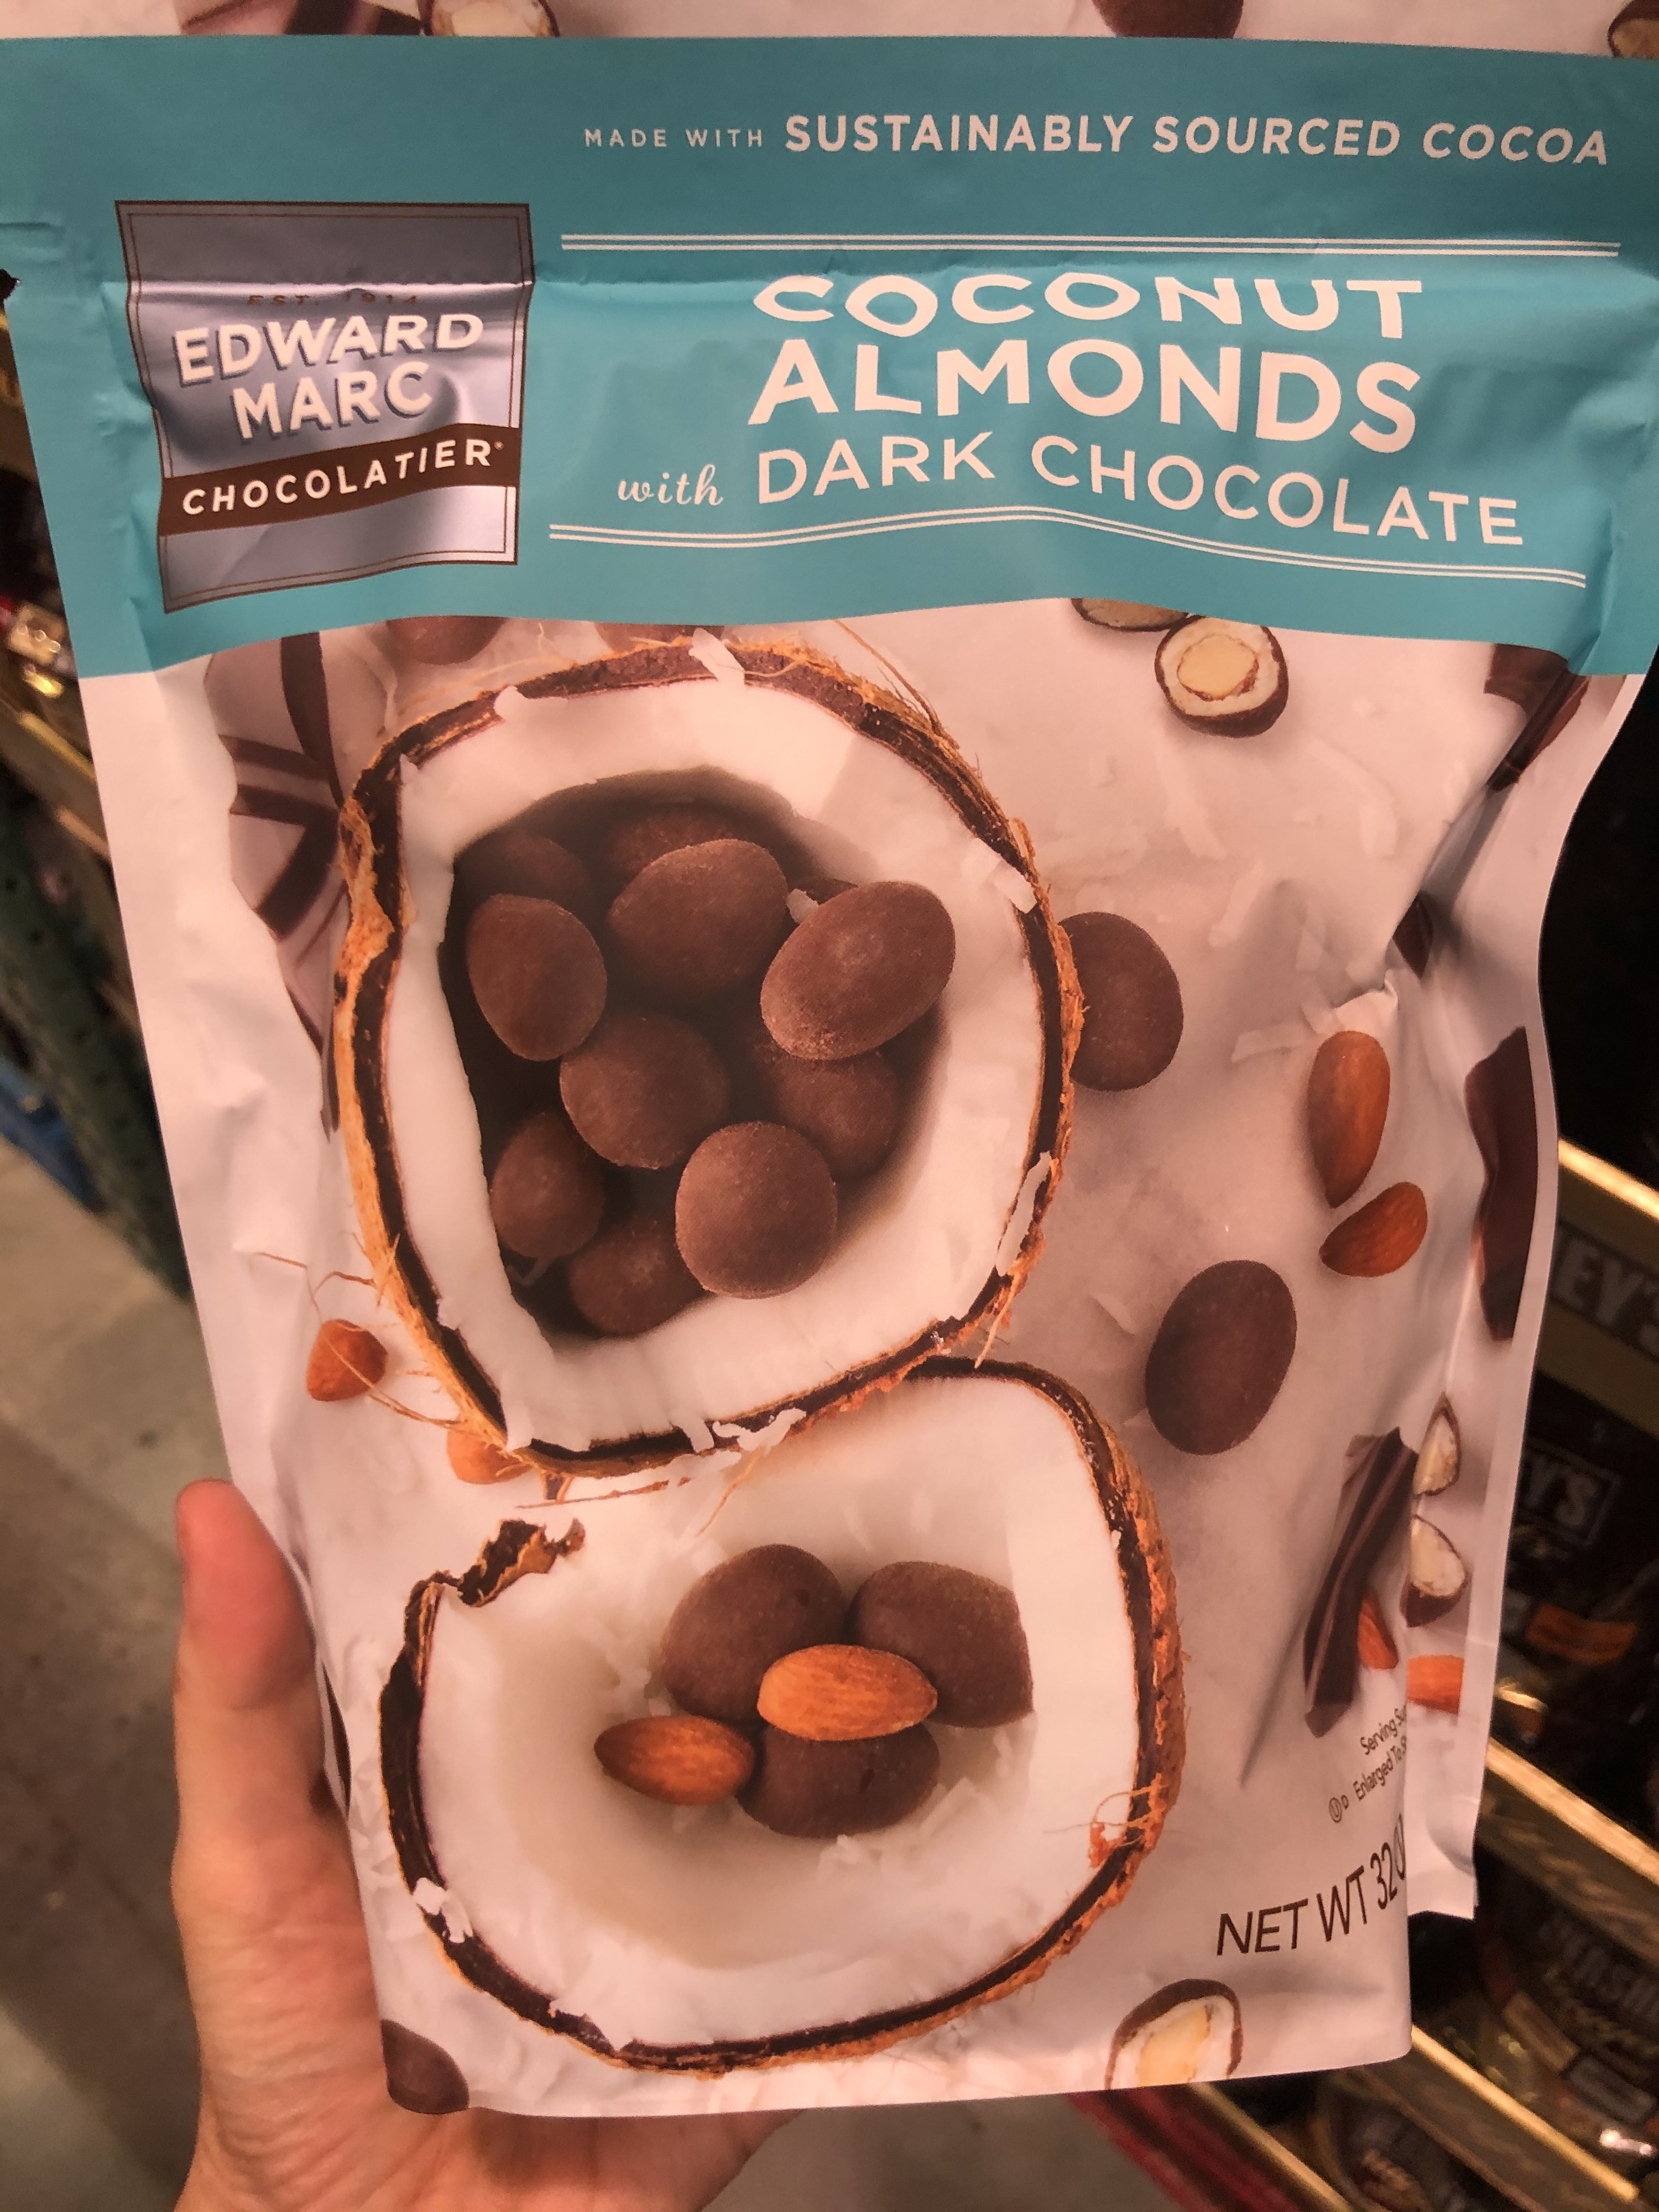 A bag of Edward Marc Chocolatier coconut almonds with dark chocolate